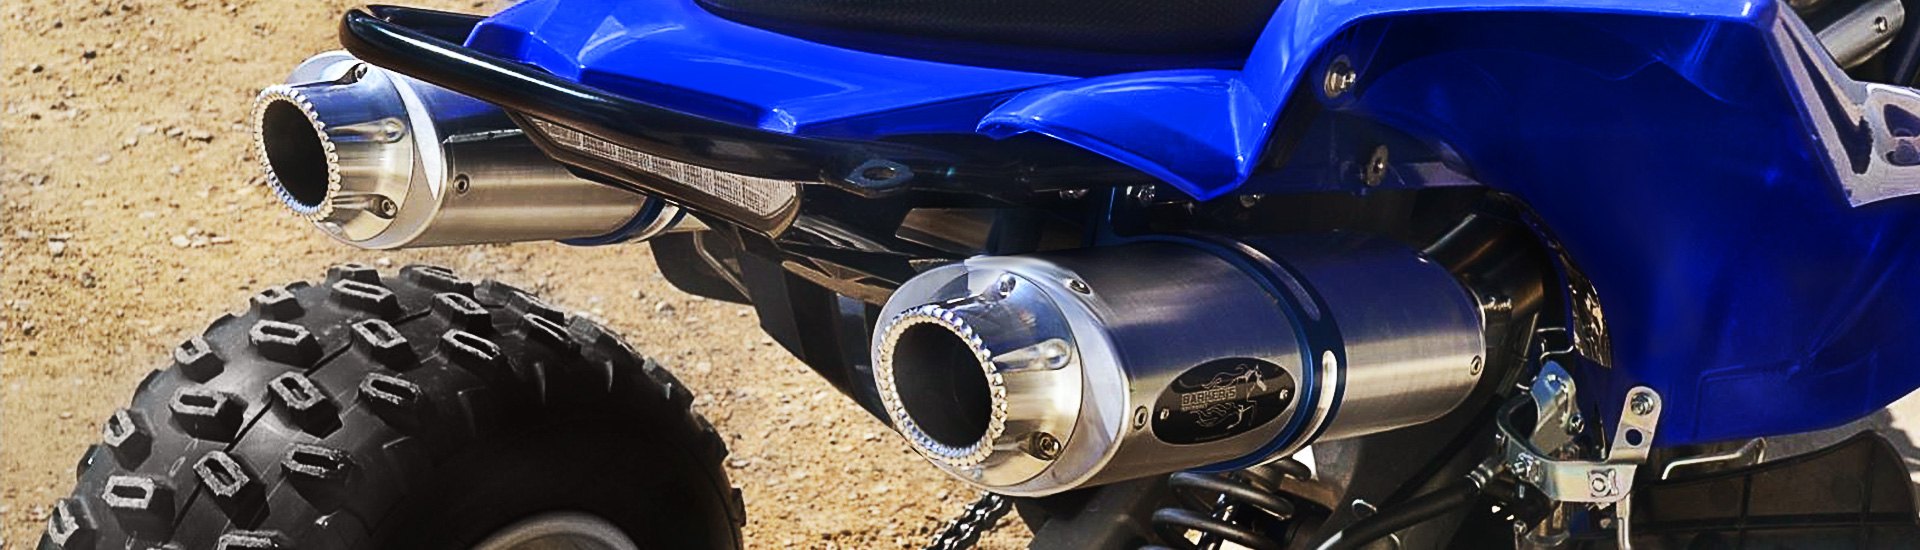 Kapsco Moto NEW ATV Exhaust Tip Muffler Power Polished Chrome For Polaris Predator 500